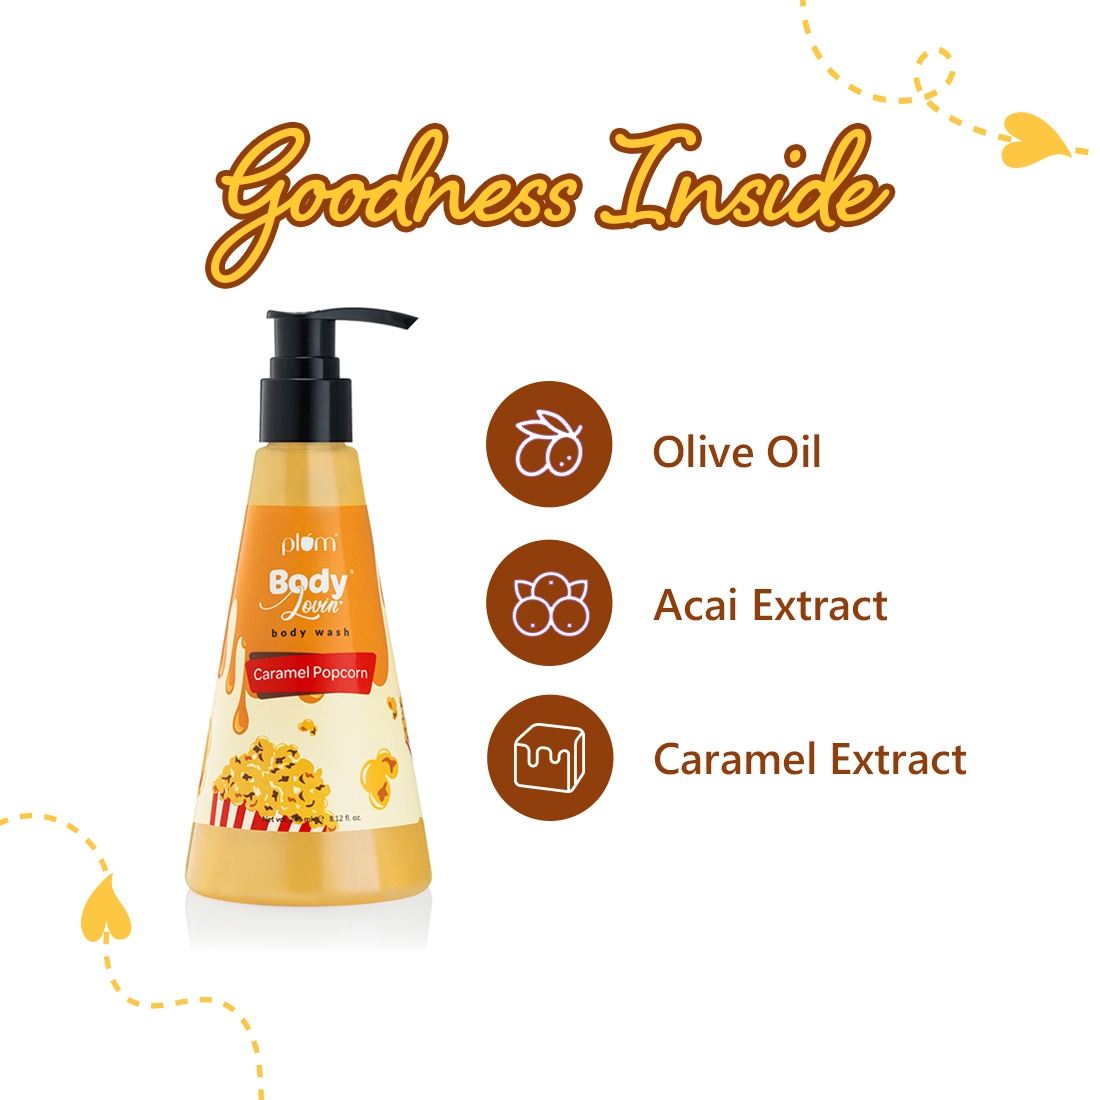 plum be good | Plum BodyLovin' Caramel Popcorn Body Wash | All Skin Types | Caramel Popcorn Fragrance | Non-Drying | Sulphate-Free | 100% Vegan 3